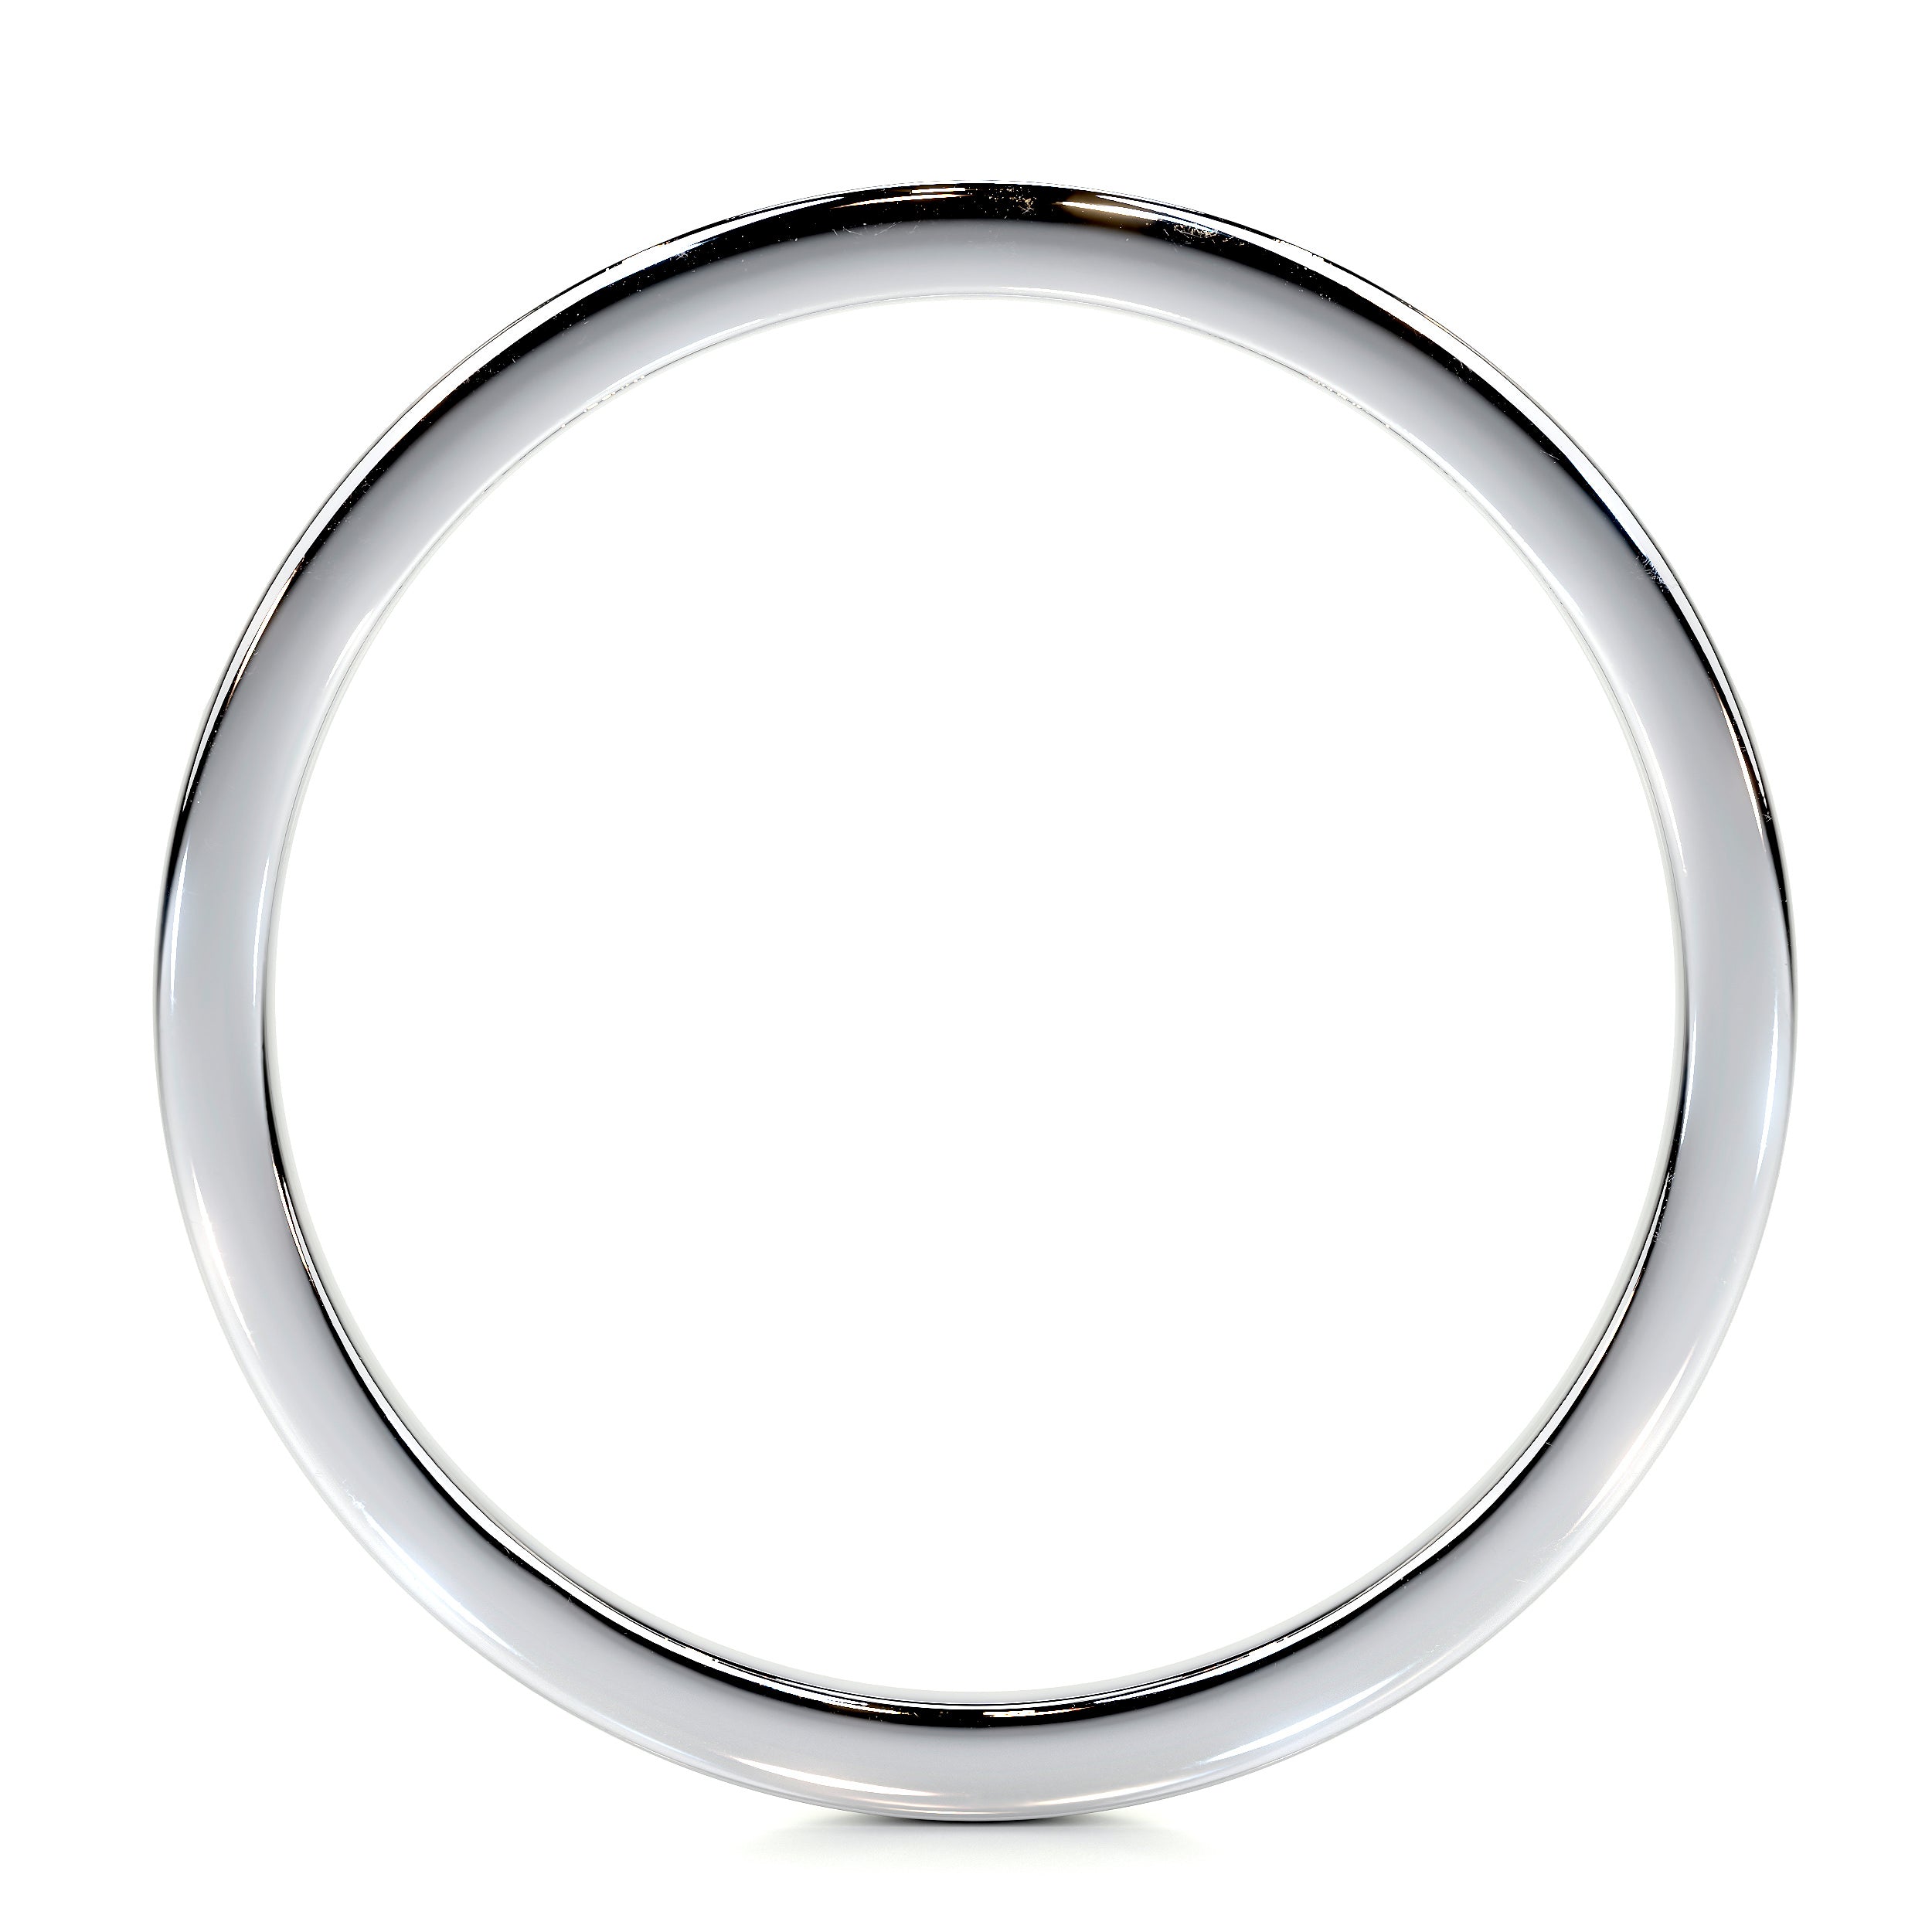 June Lab Grown Diamond Wedding Ring   (0.2 Carat) - Platinum